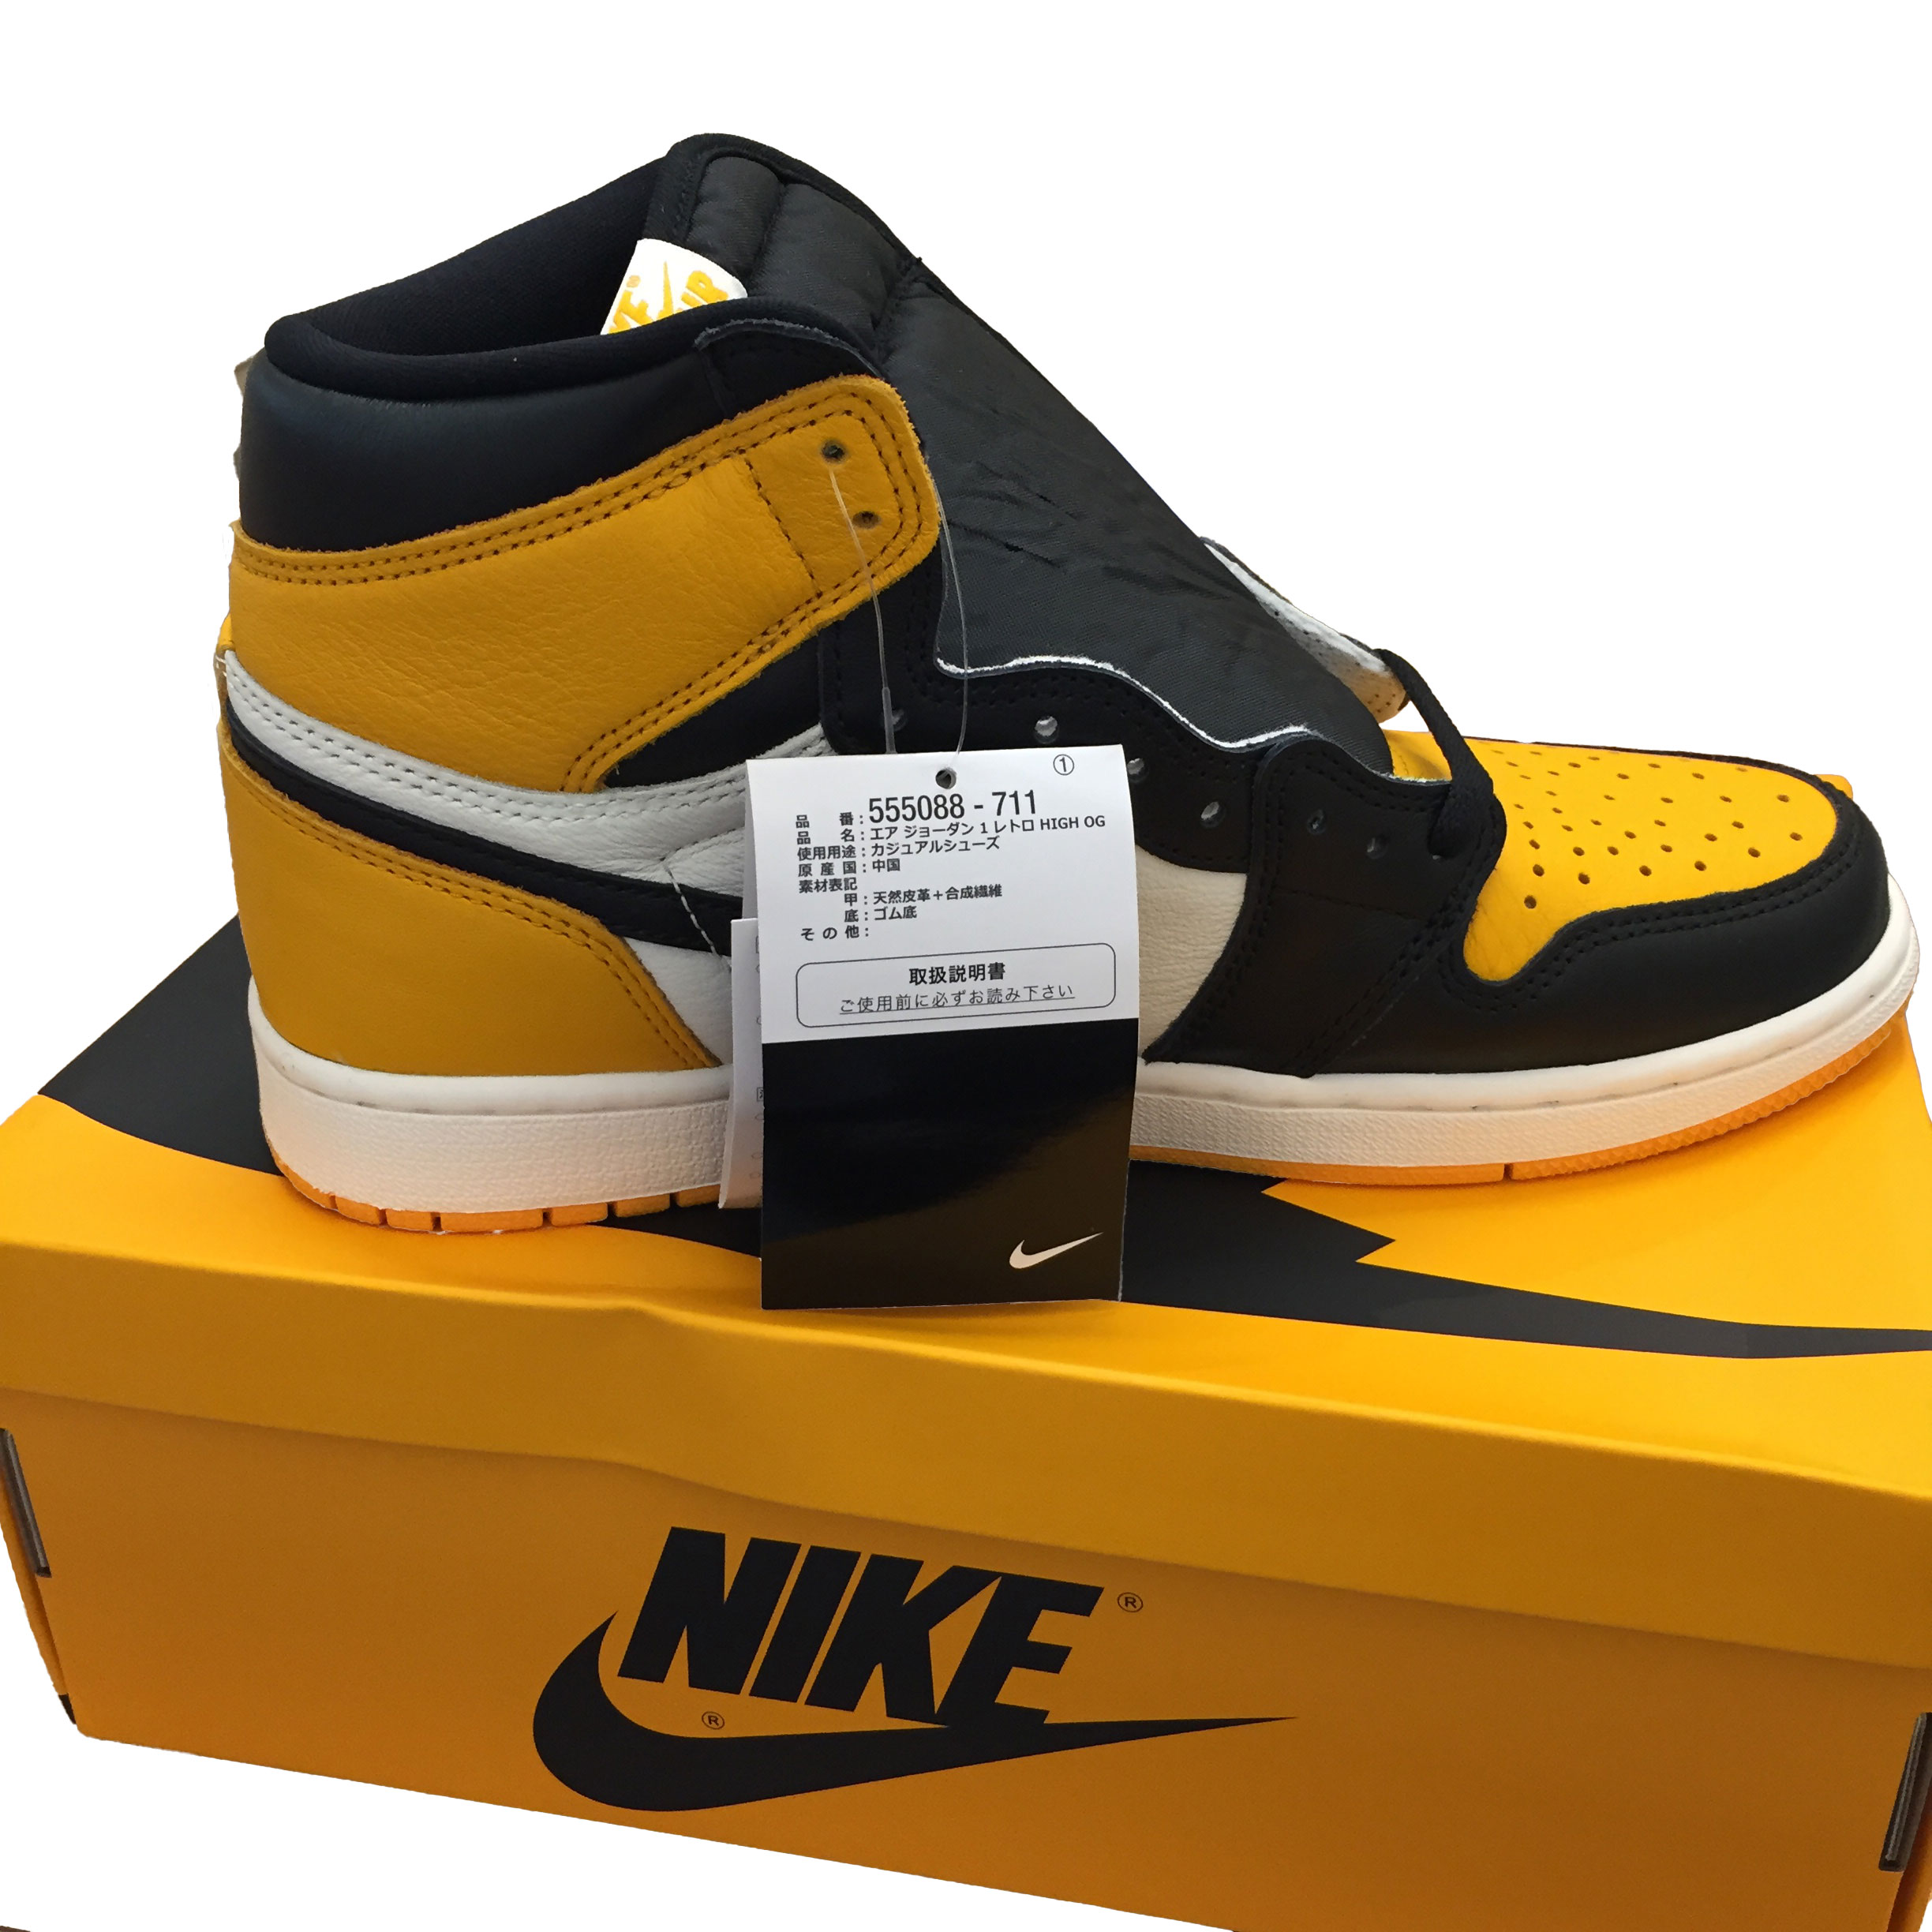 Nike Air Jordan 1 Retro High OG Taxi　555088 711